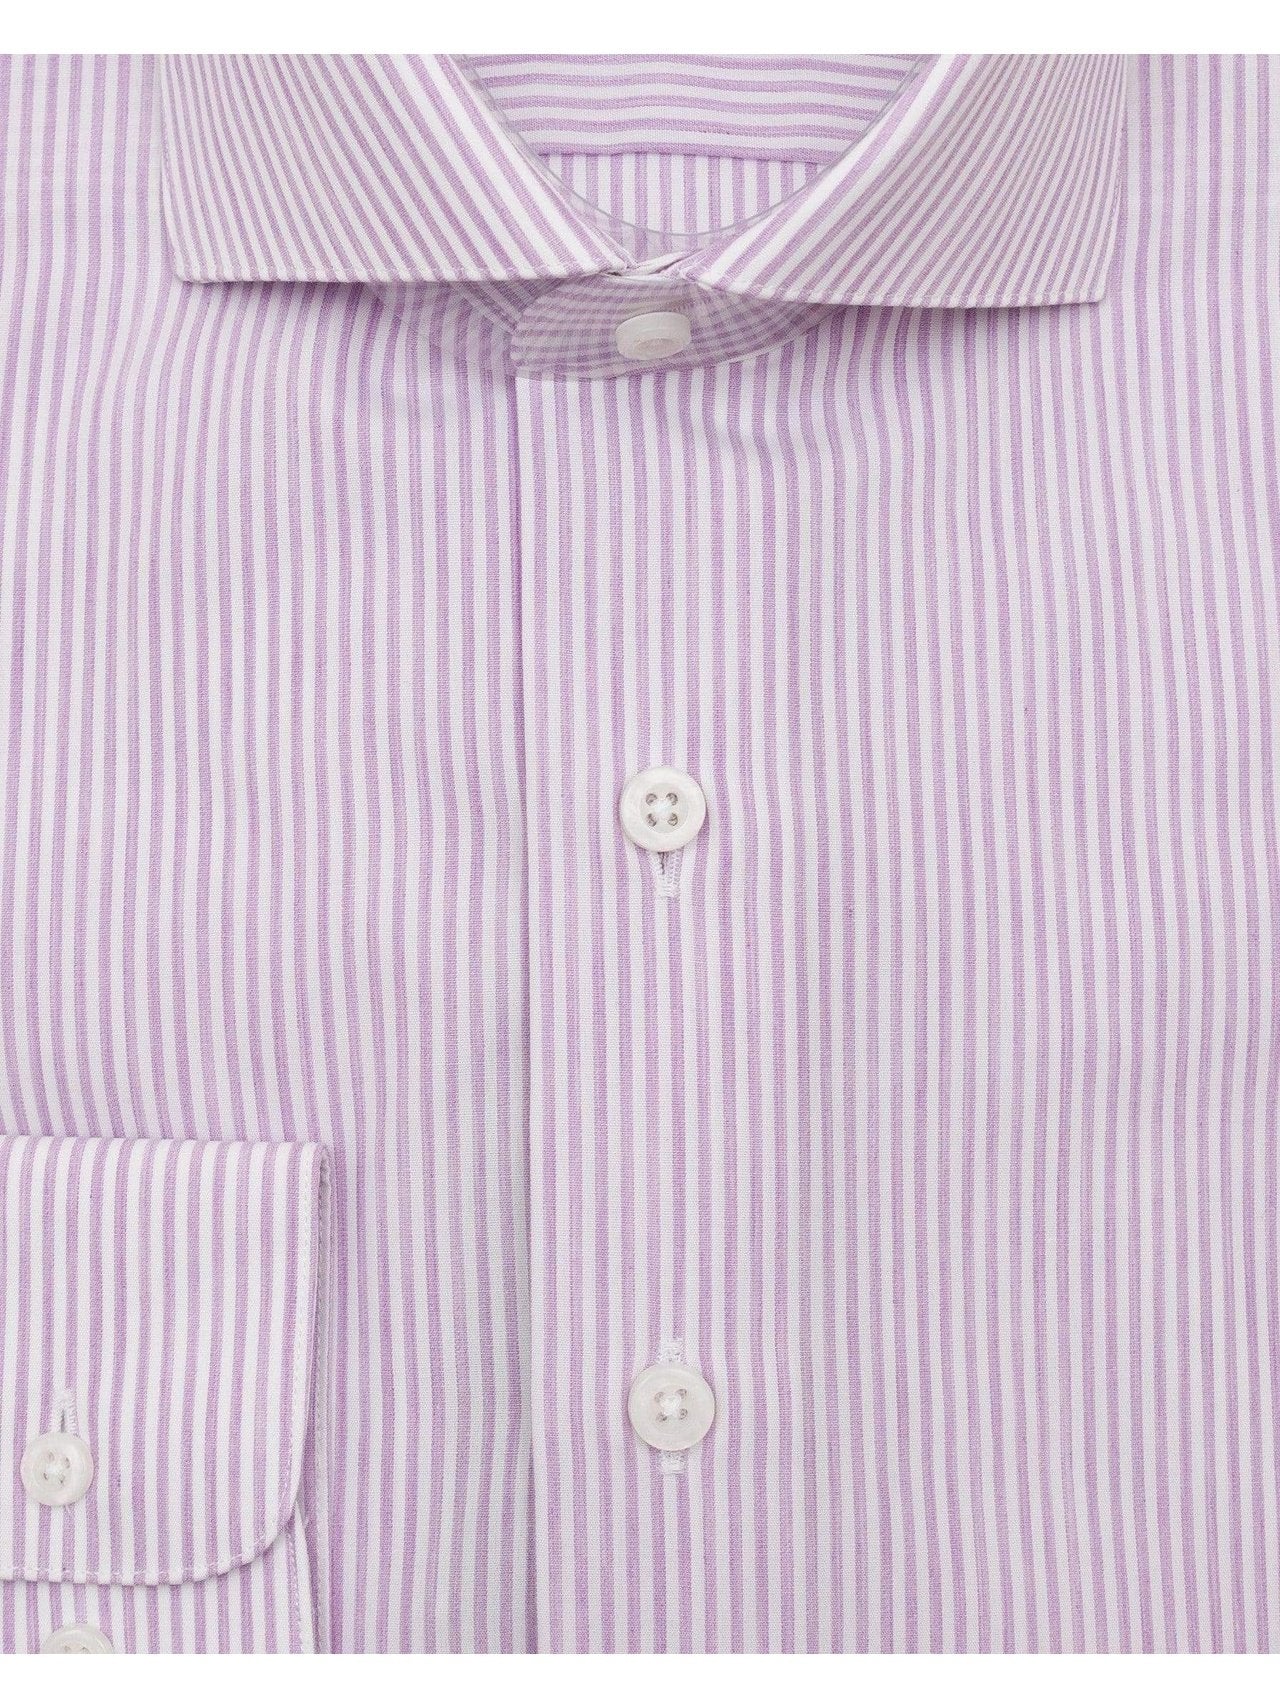 Brand P SHIRTS Mens Cotton Lavender Striped Slim Fit Cutaway Collar Easy Care Dress Shirt